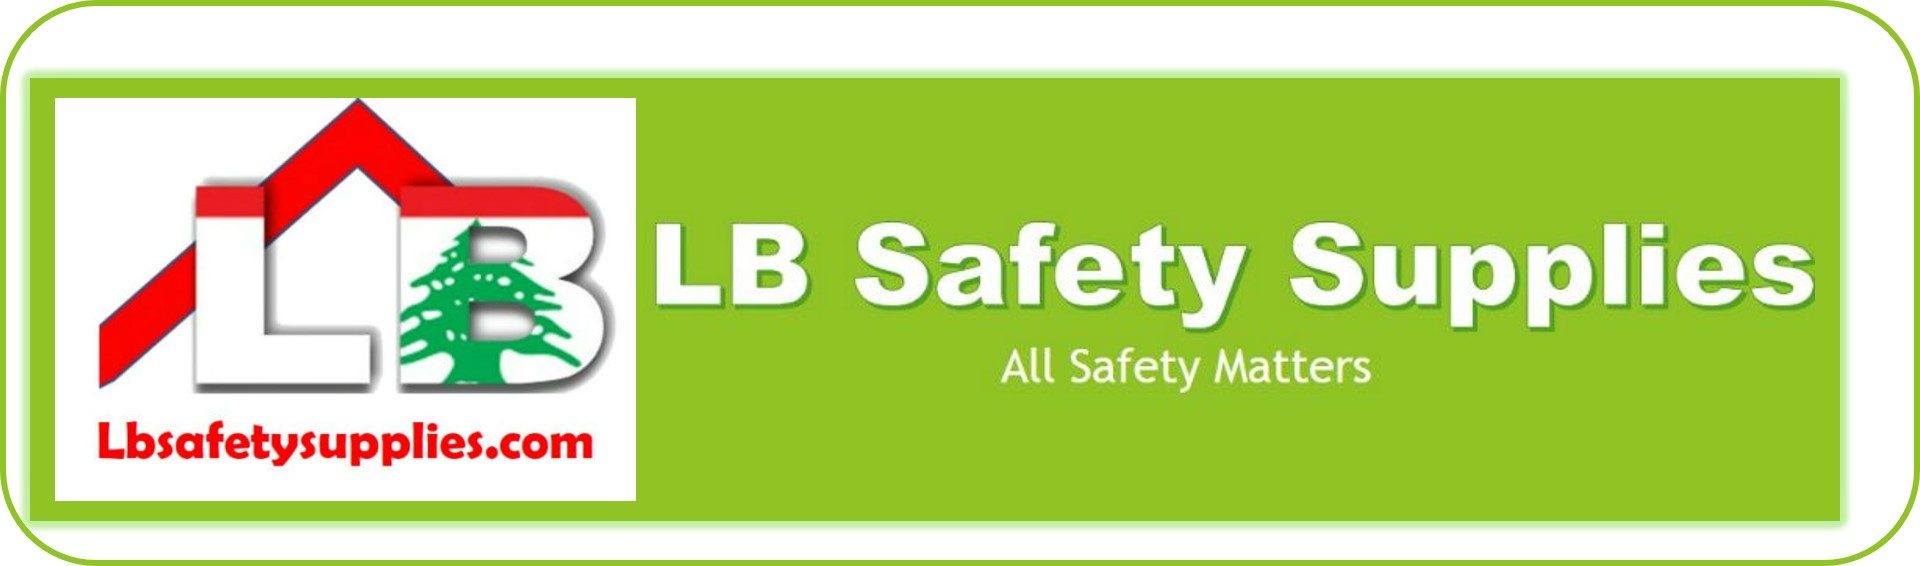 LB Safety Supplies